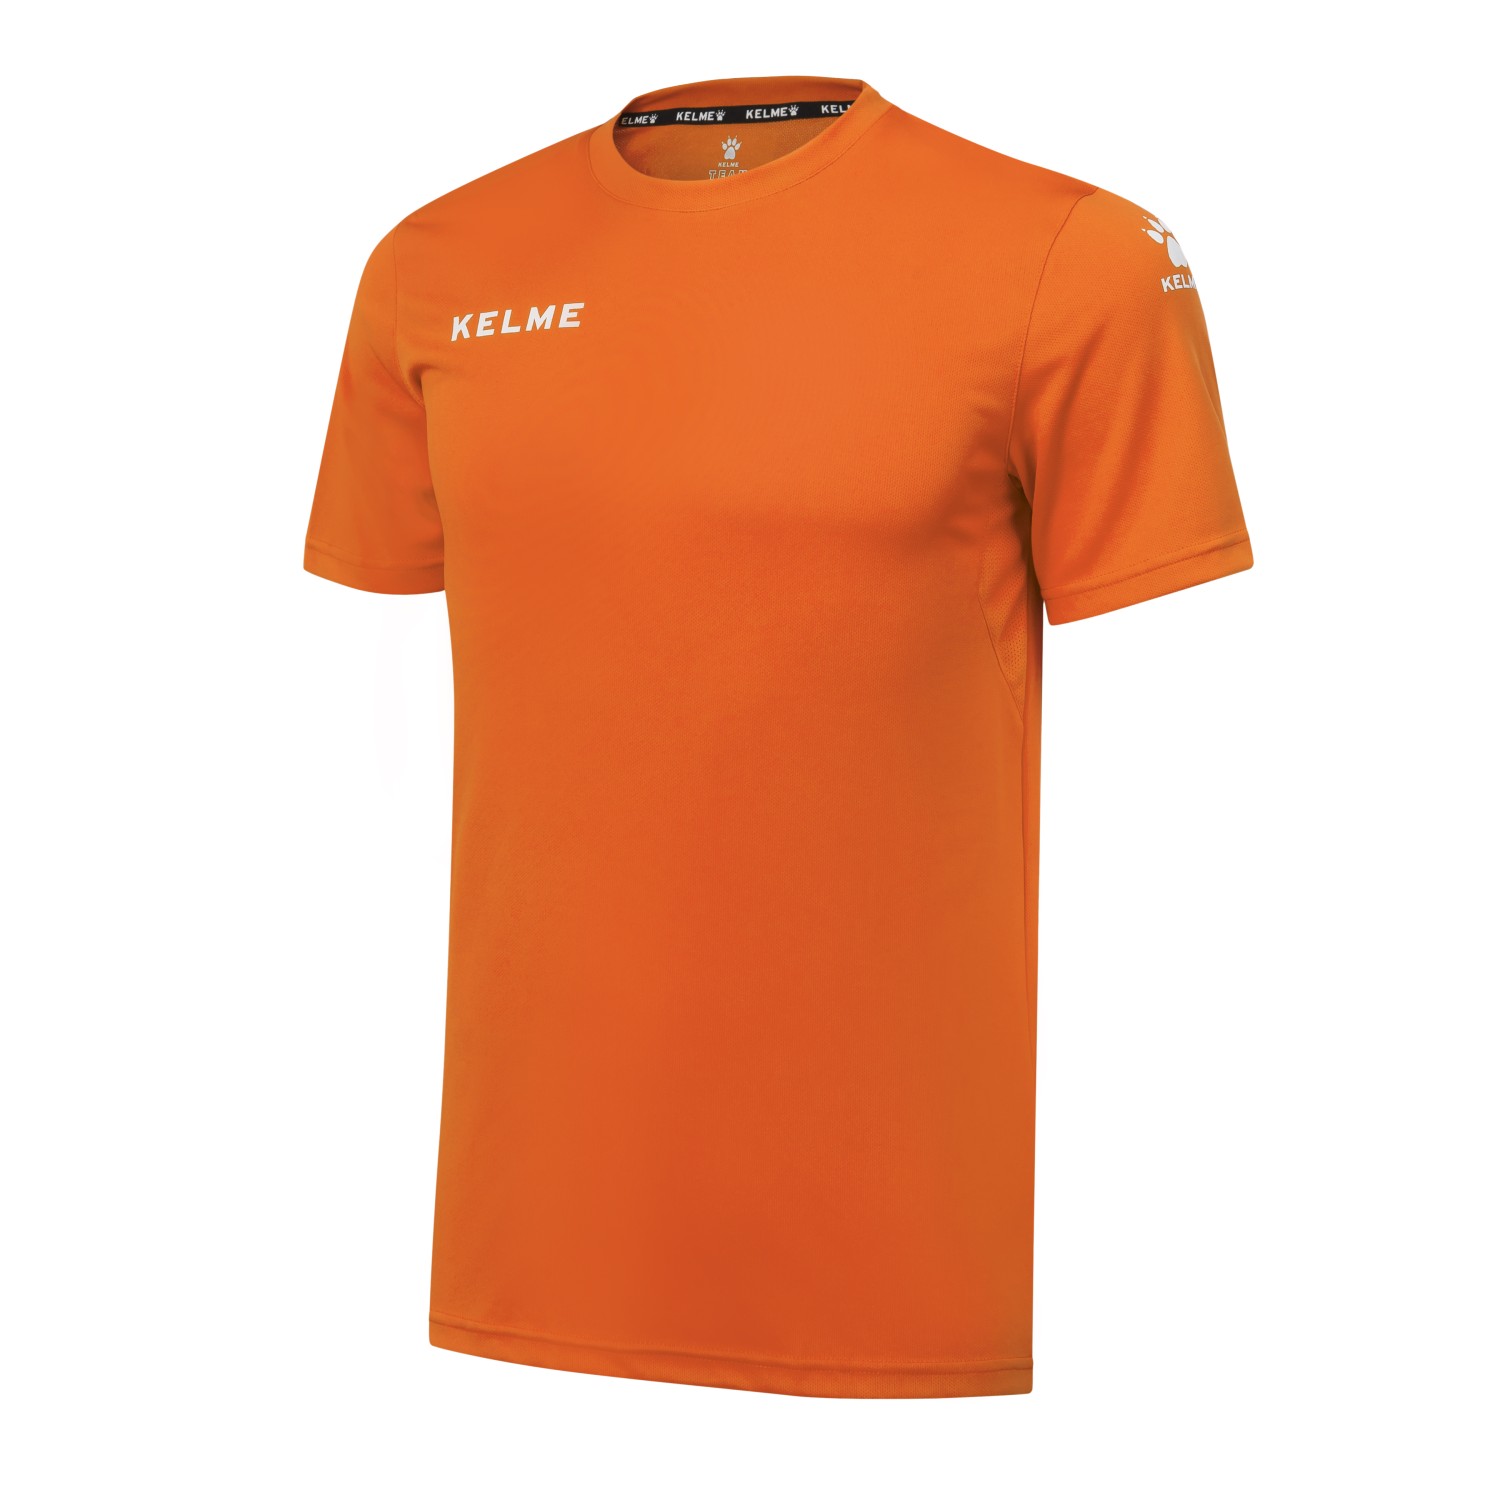 Camiseta Campus Kelme Naranja - naranja - 